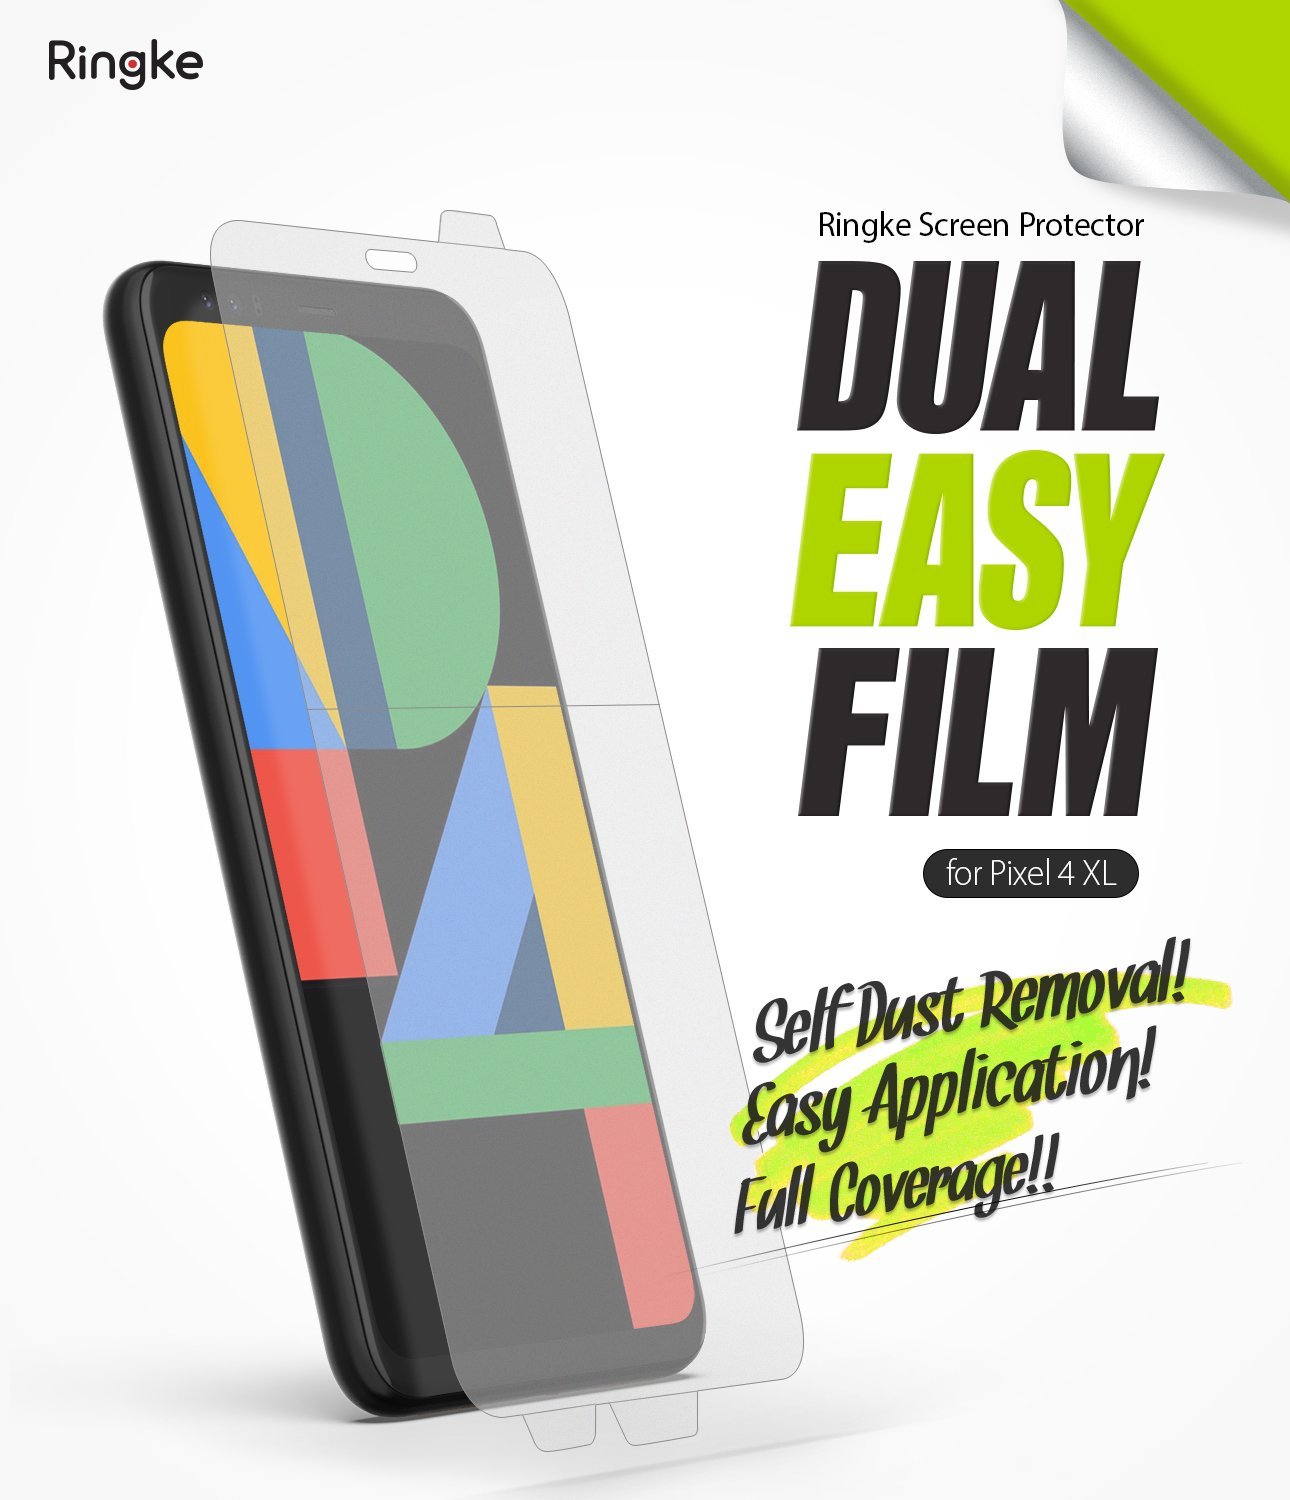 Google Pixel 4 XL, Ringke Dual Easy Film, Screen Protector